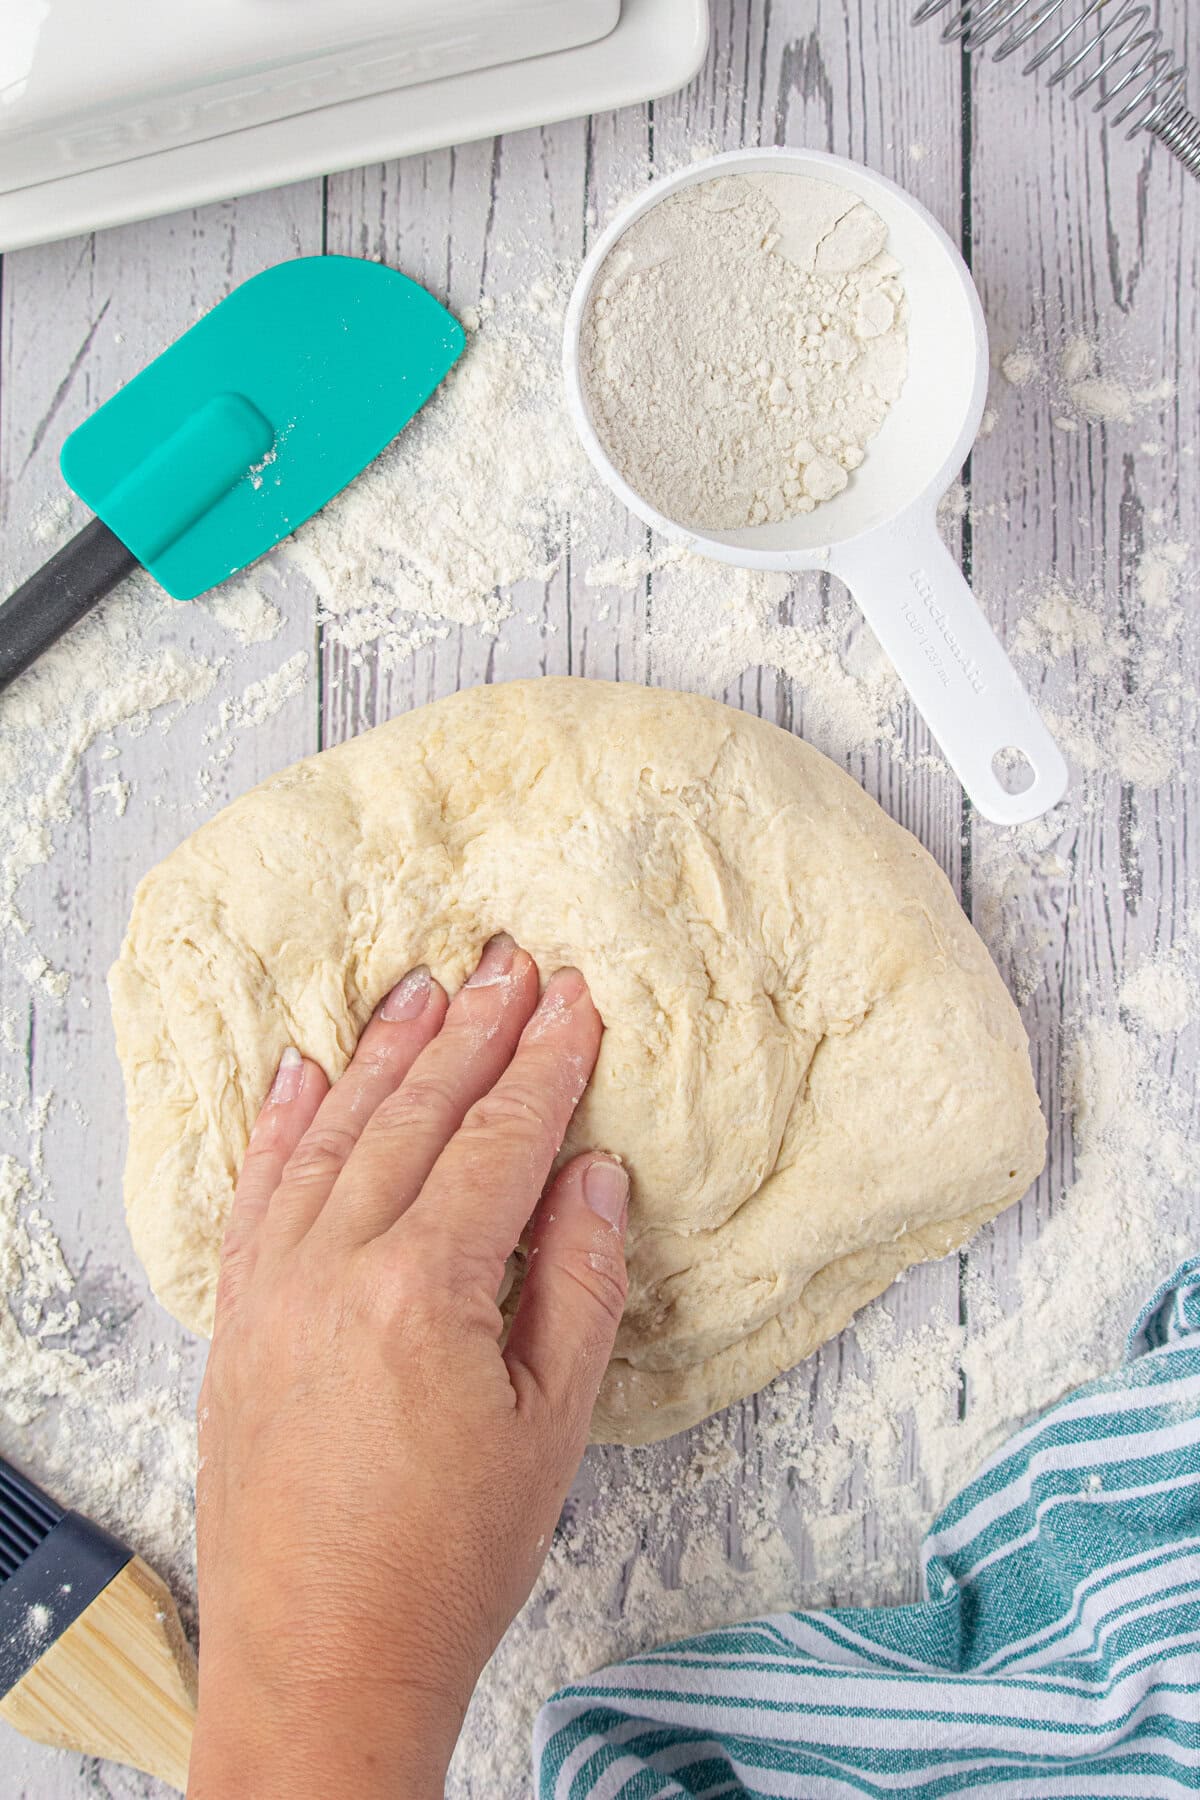 A hand kneading the dough on a floured countertop.